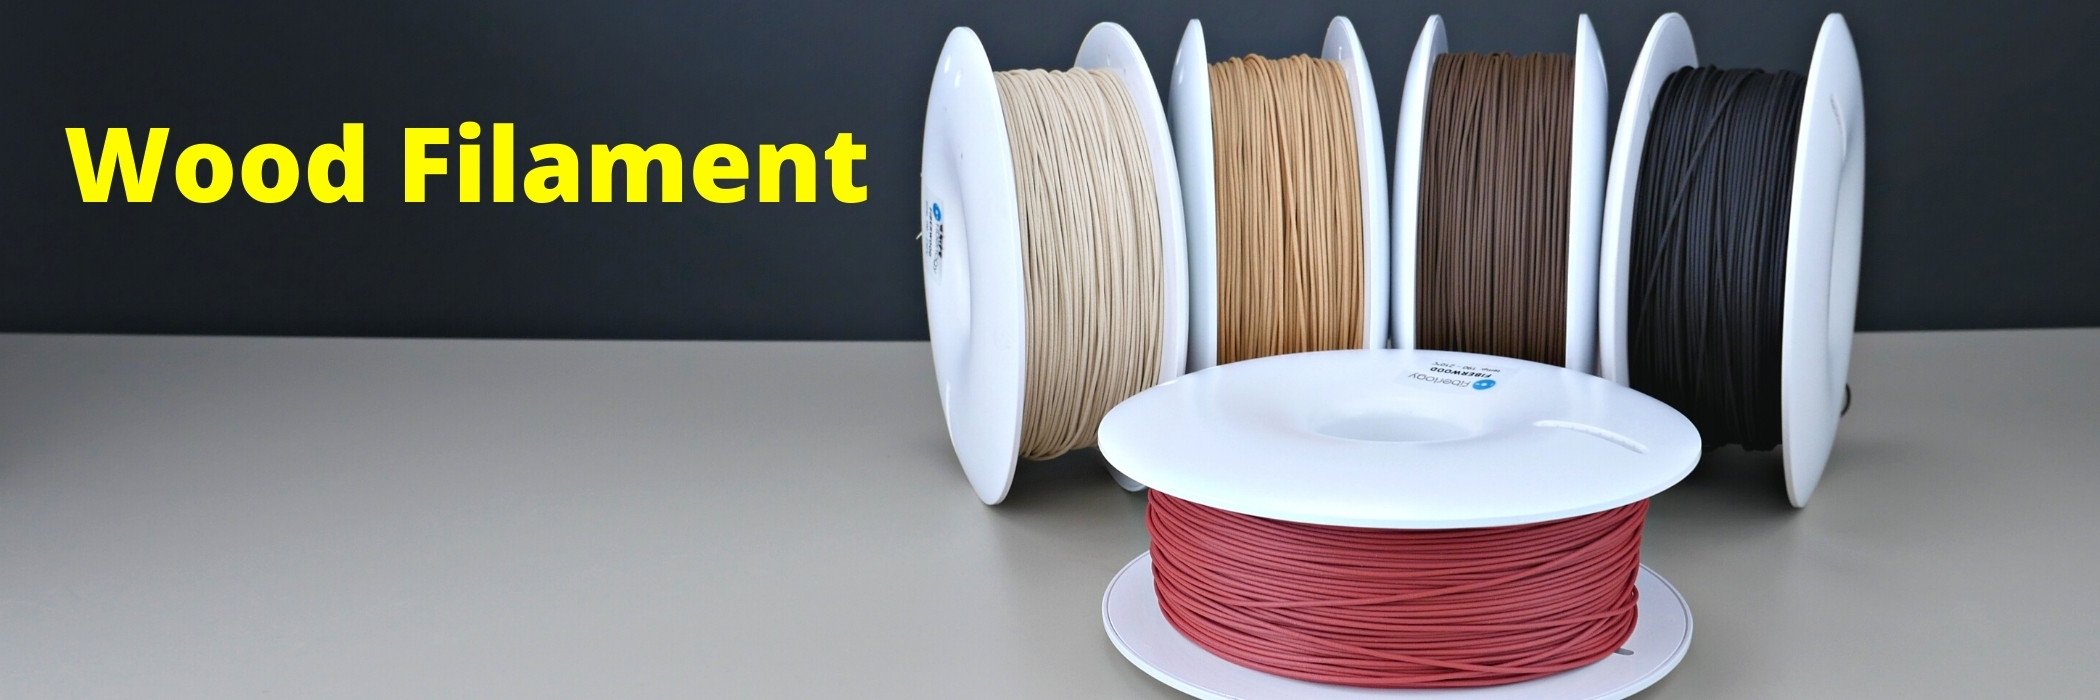 Wood filament